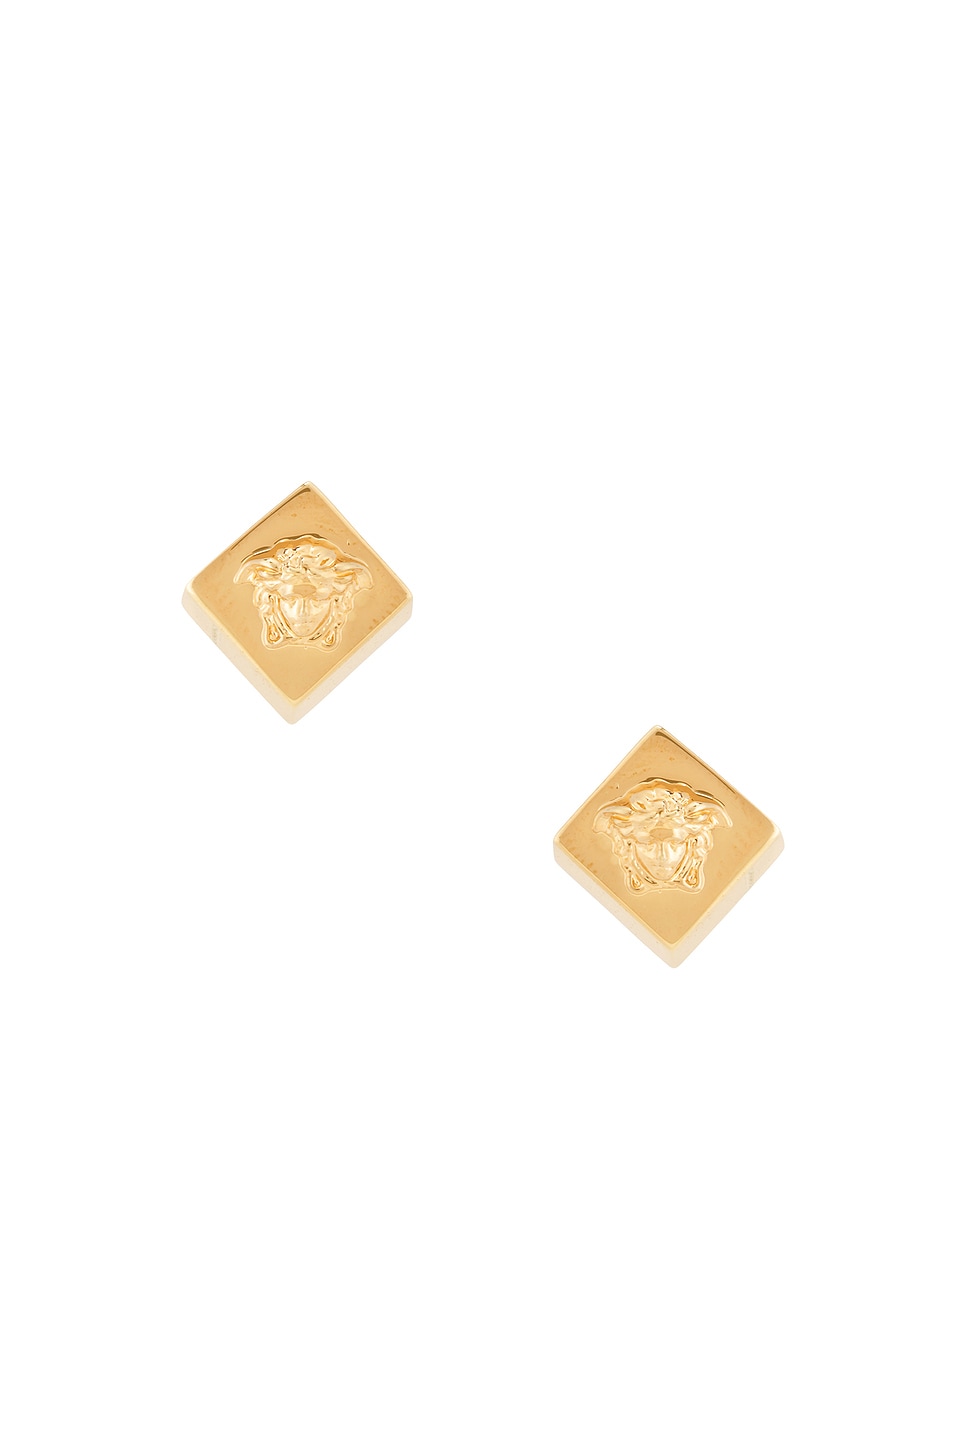 VERSACE Metal Square Earrings in Metallic Gold